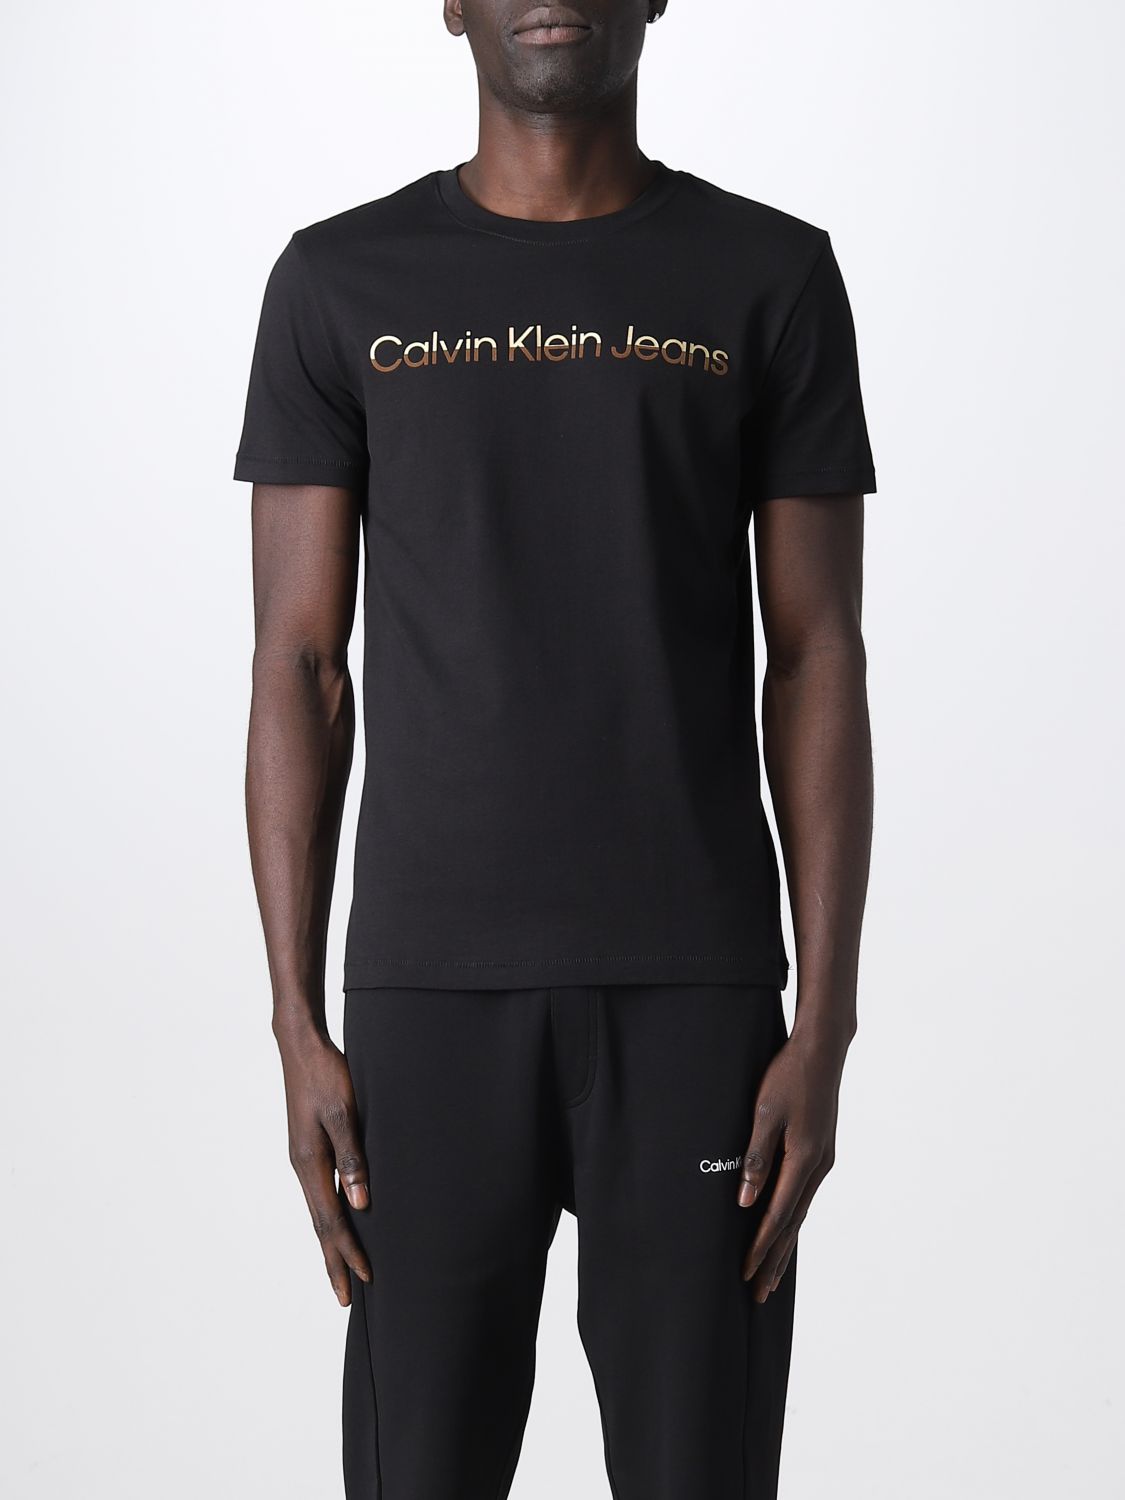 bilag mareridt ild CALVIN KLEIN JEANS: t-shirt for man - Black